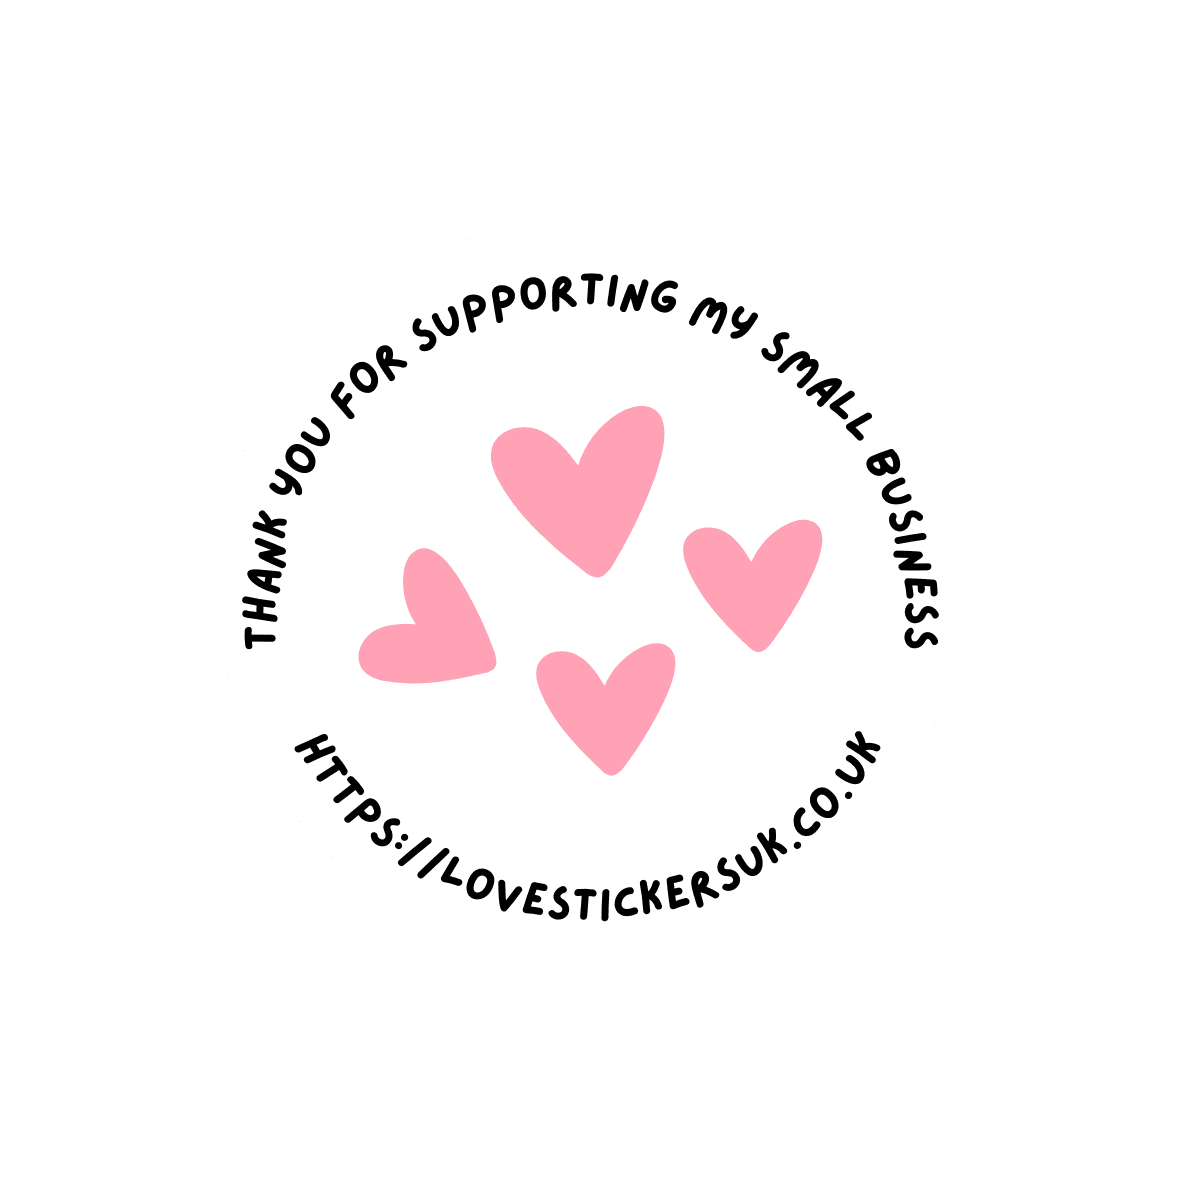 Love Stickers UK